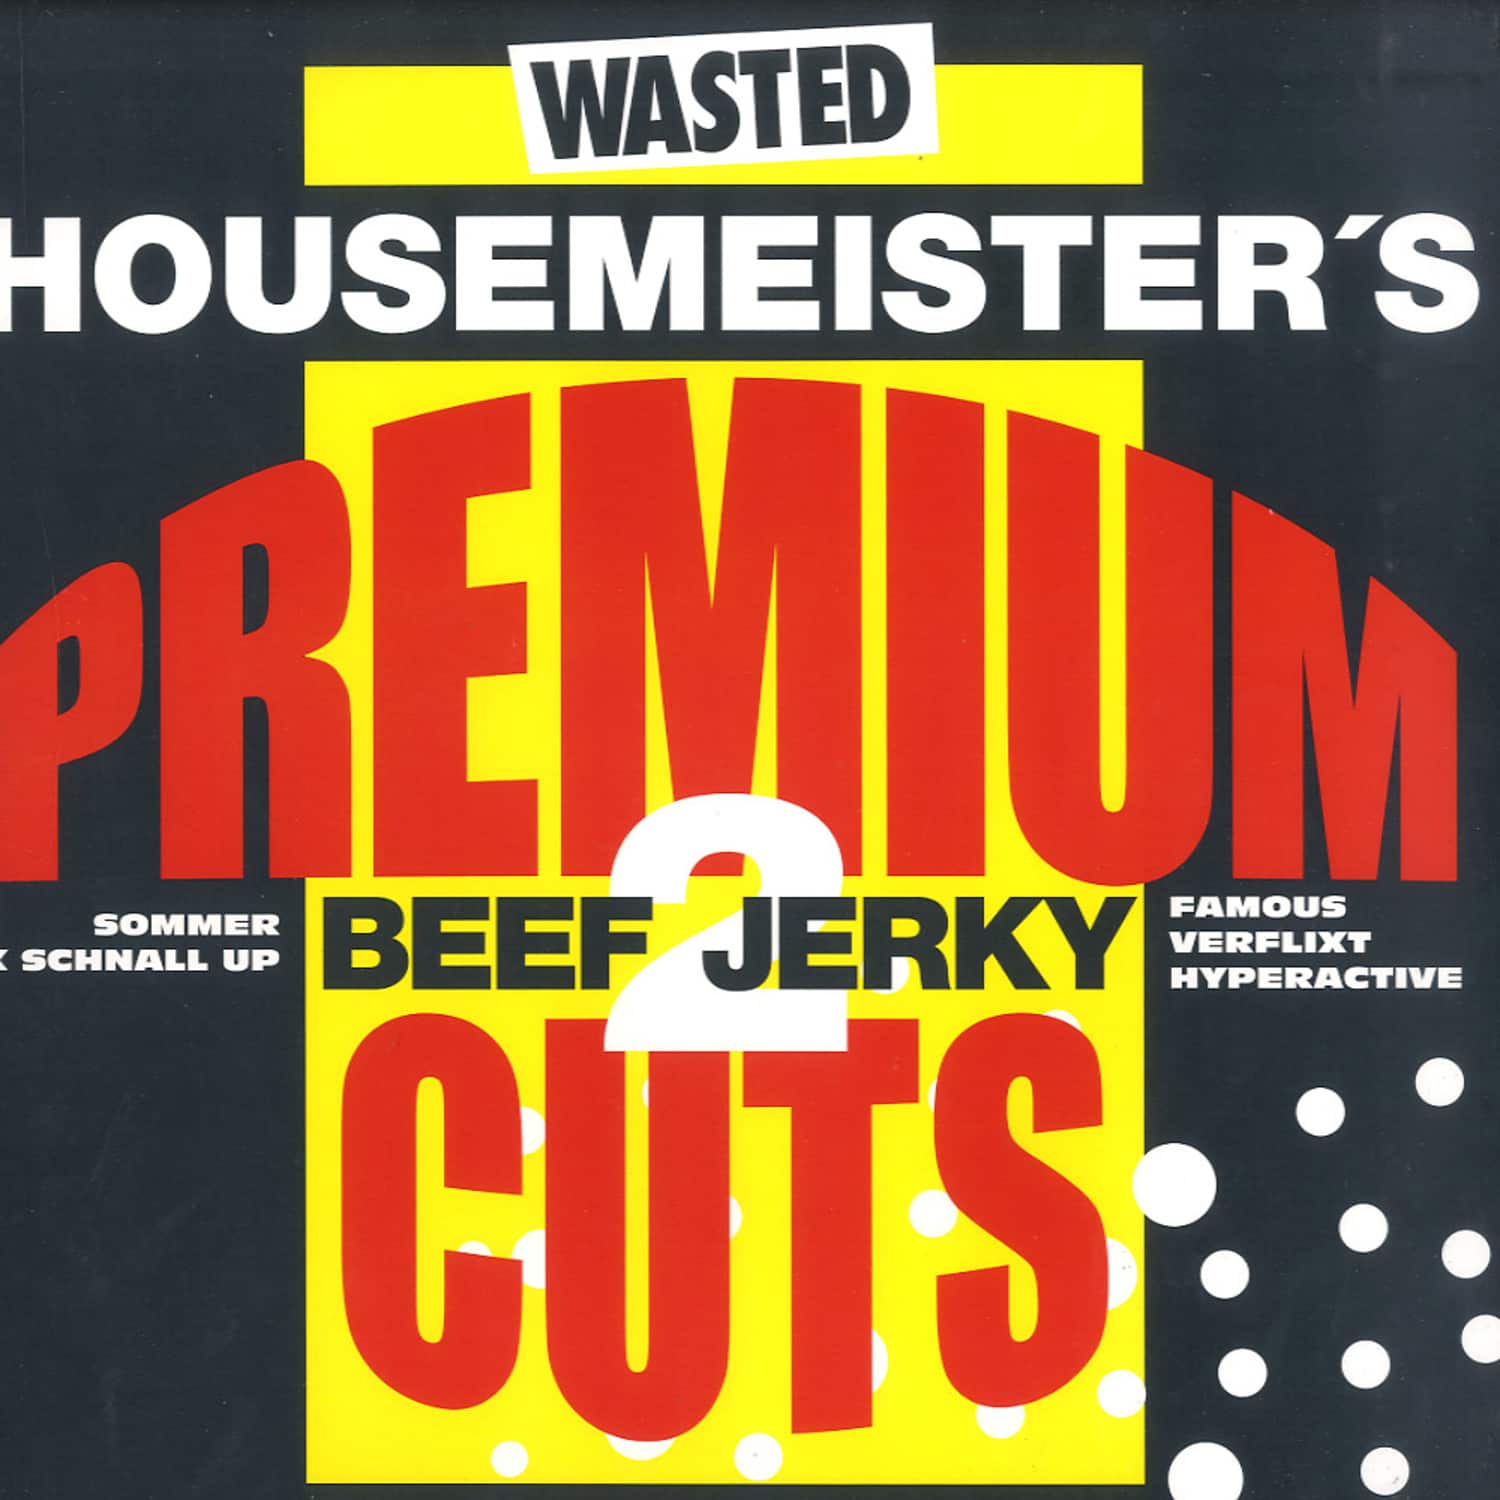 Housemeister - BEEF JERKEY 2 PREMIUM CUTS